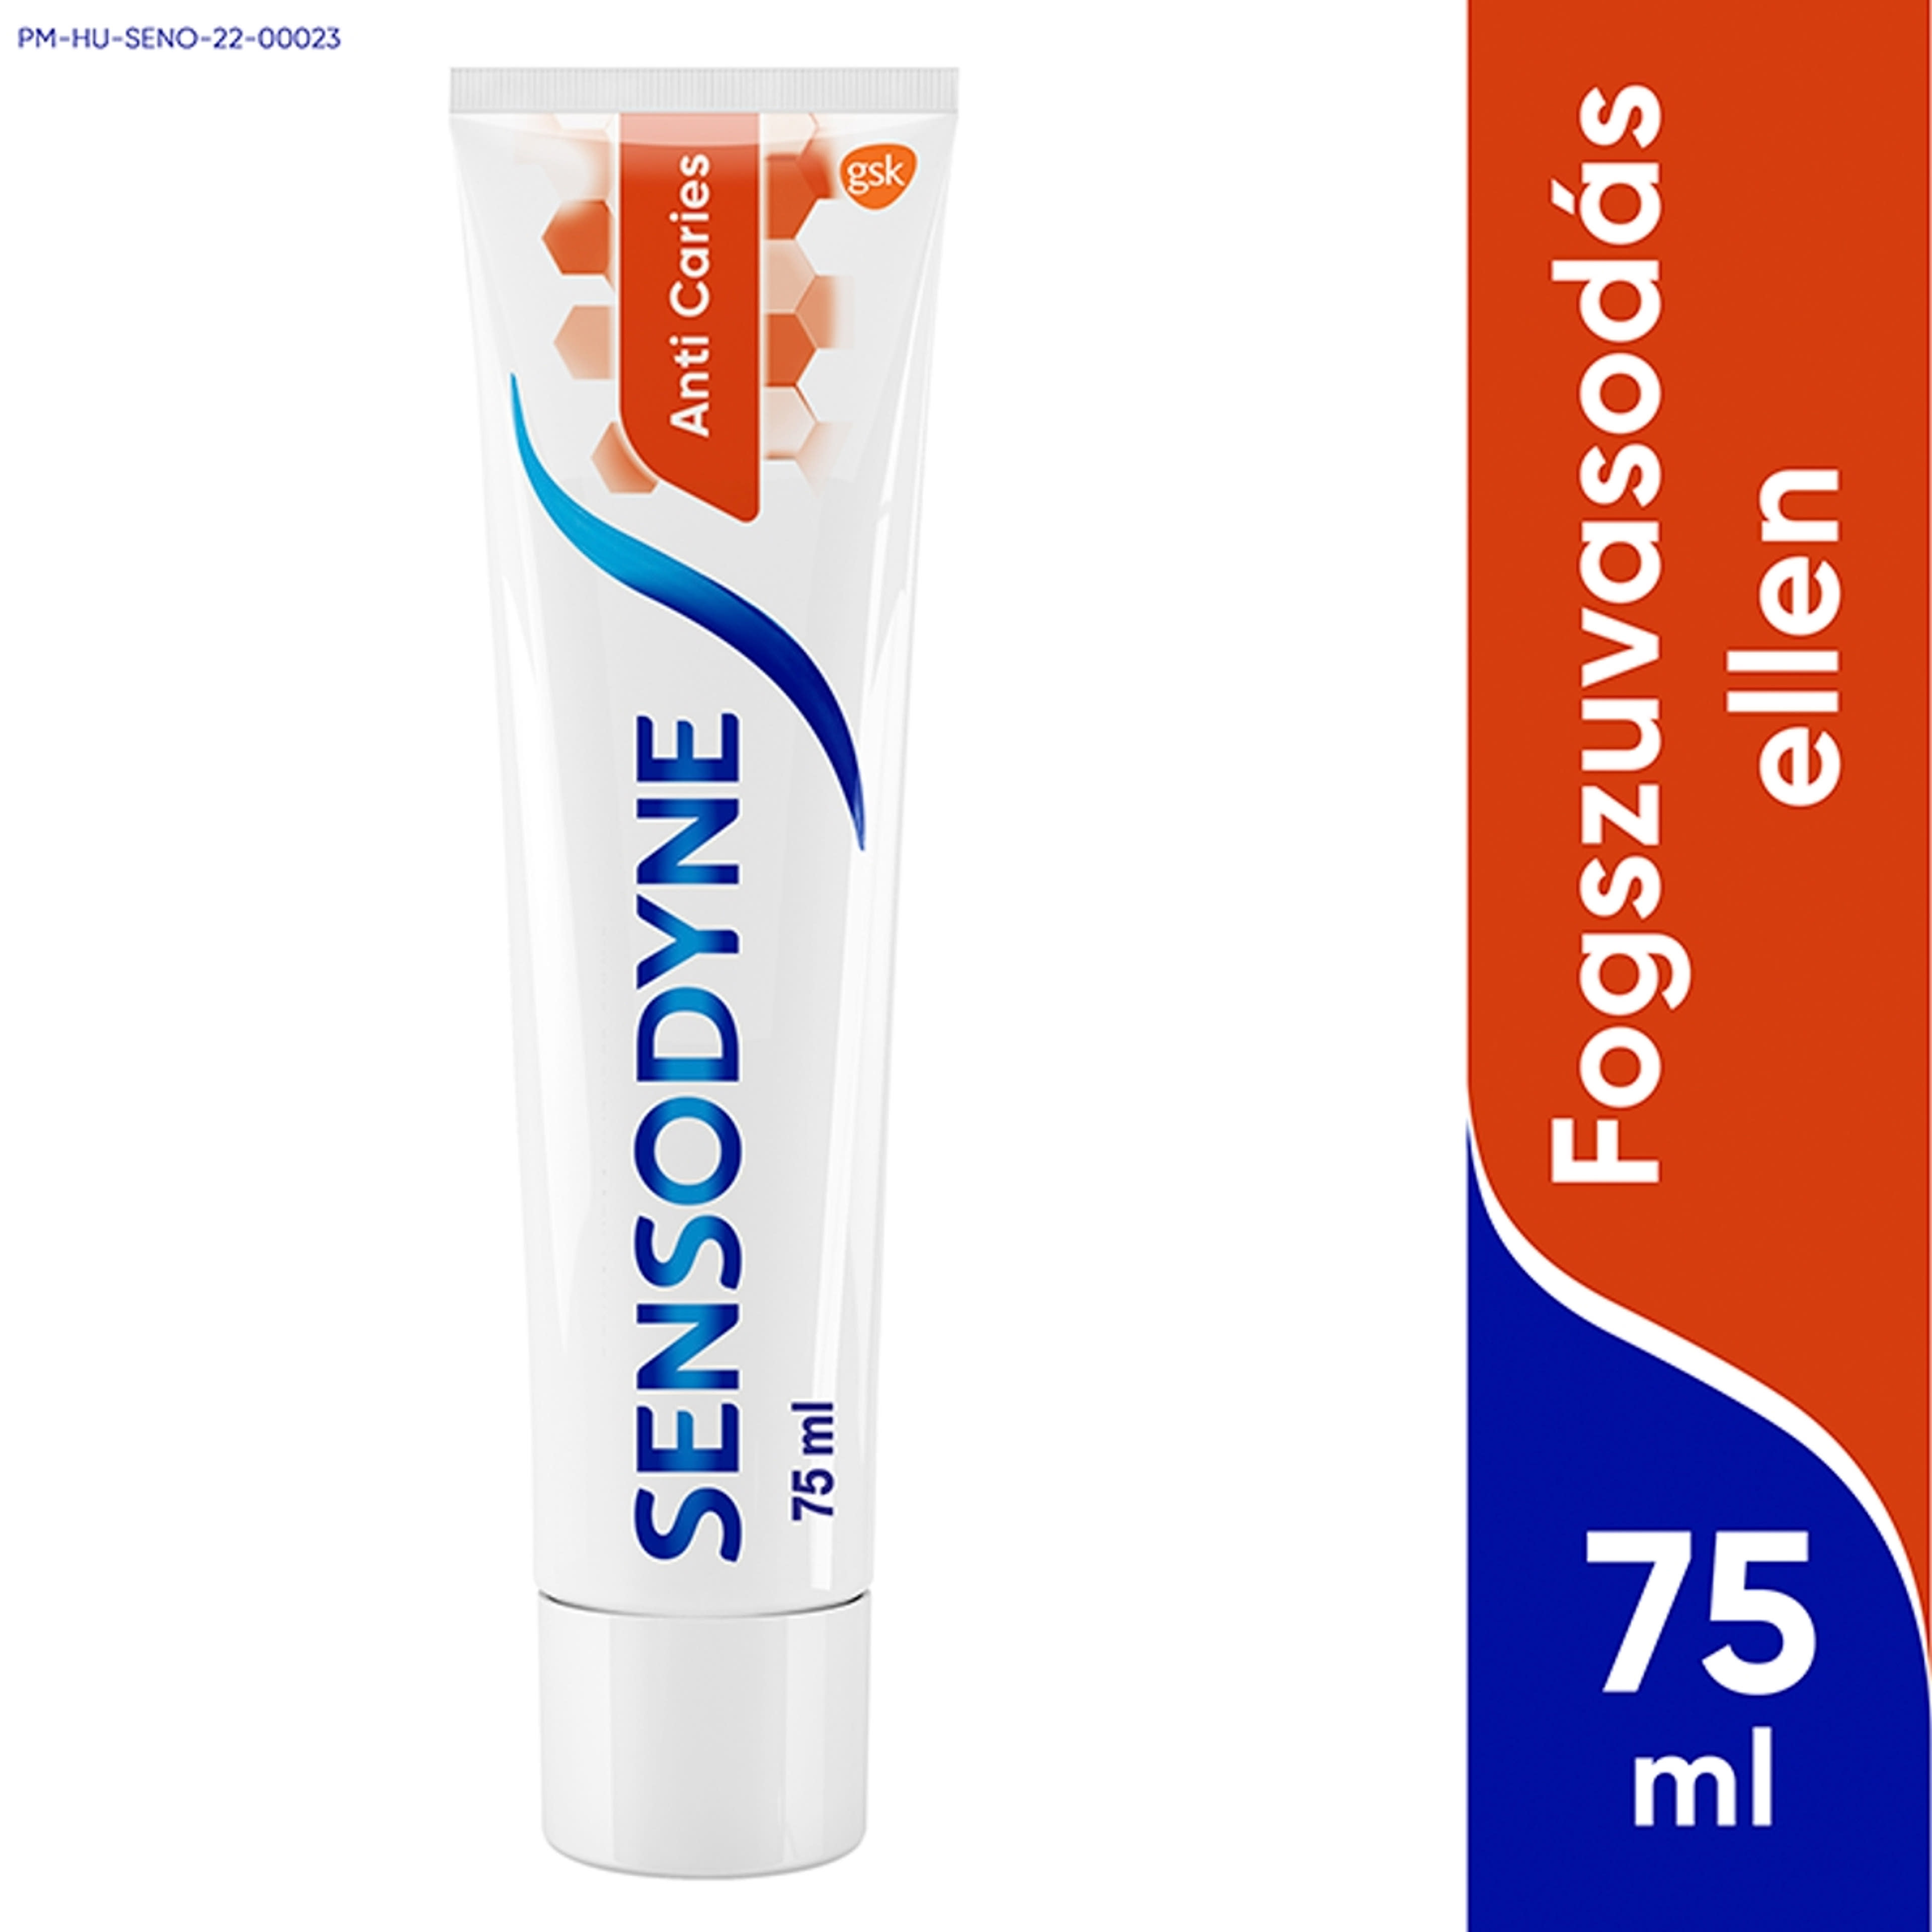 Sensodyne Anti Caries fogkrém Tiro pack 3 db - 75 ml